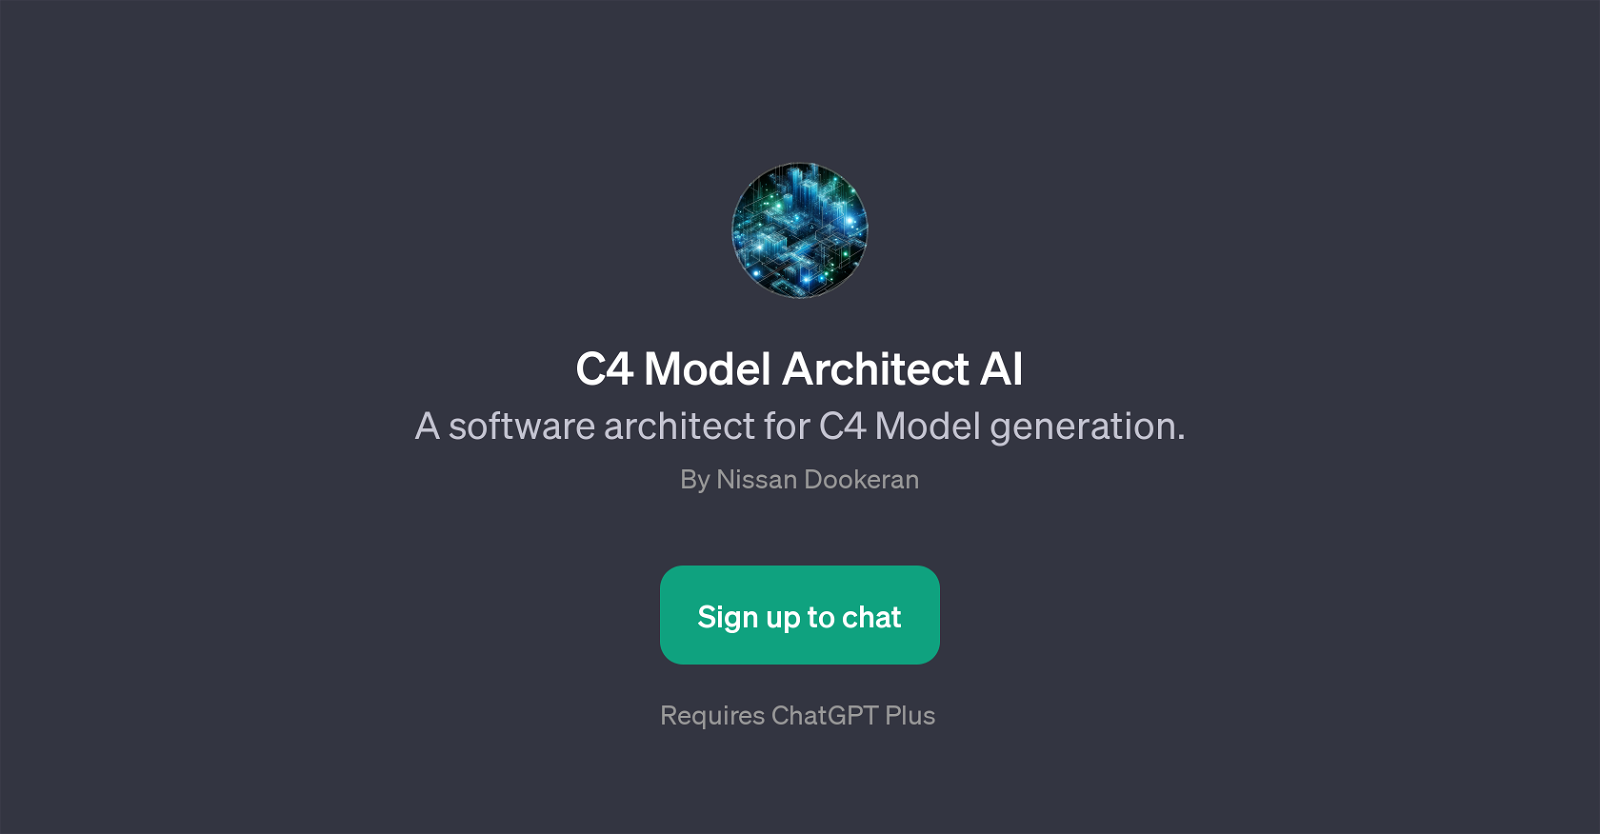 C4 Model Architect AI website